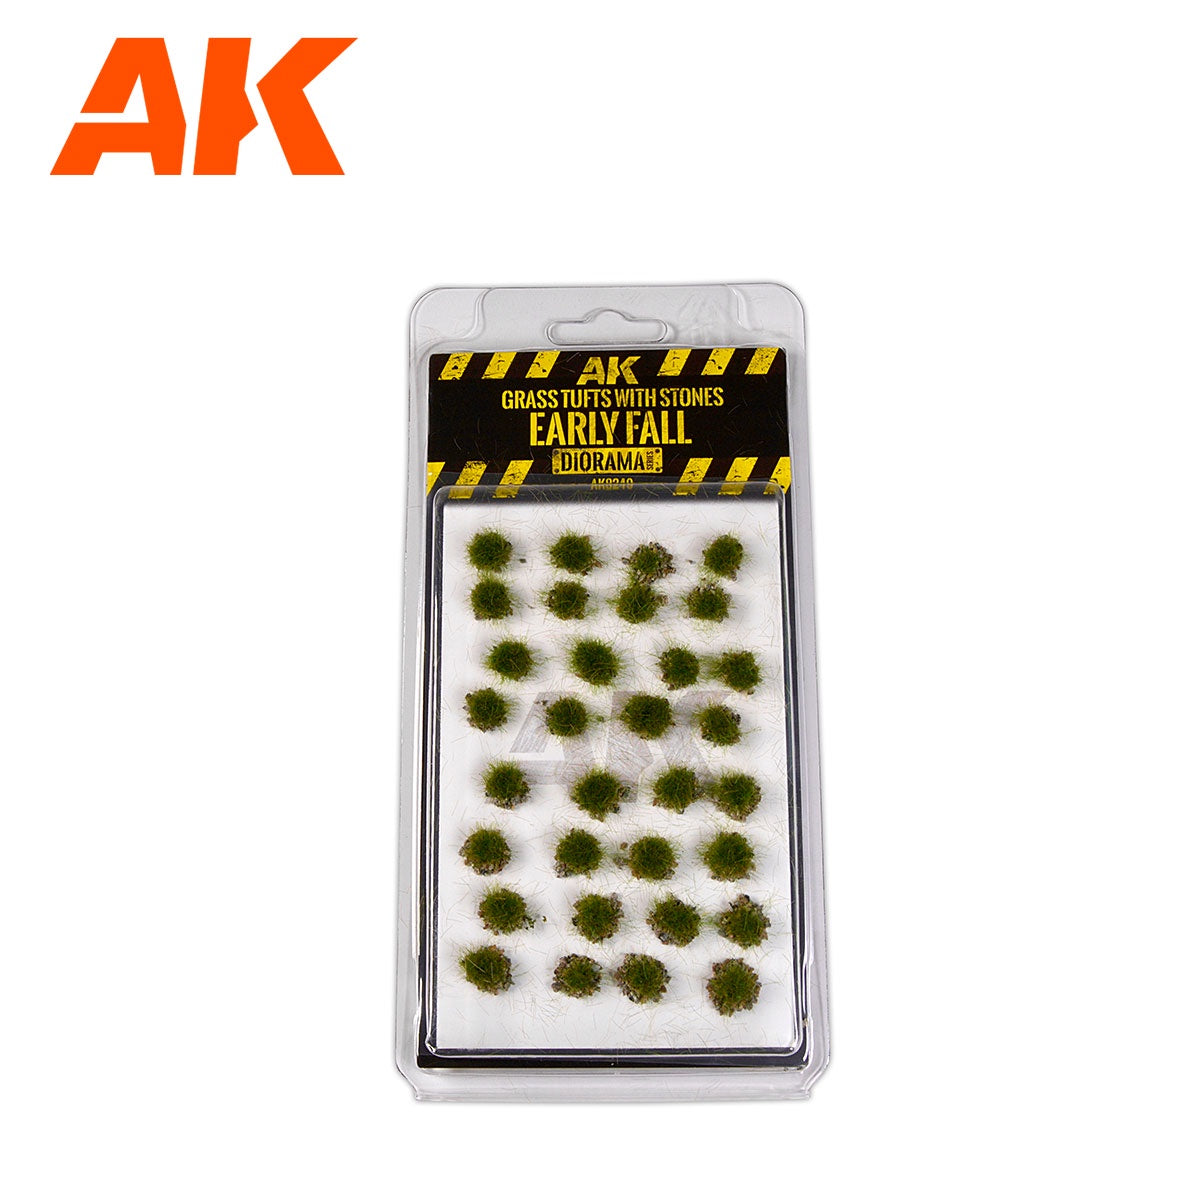 AK Interactive Grass With Stones Early Fall Tuffs AK-8249